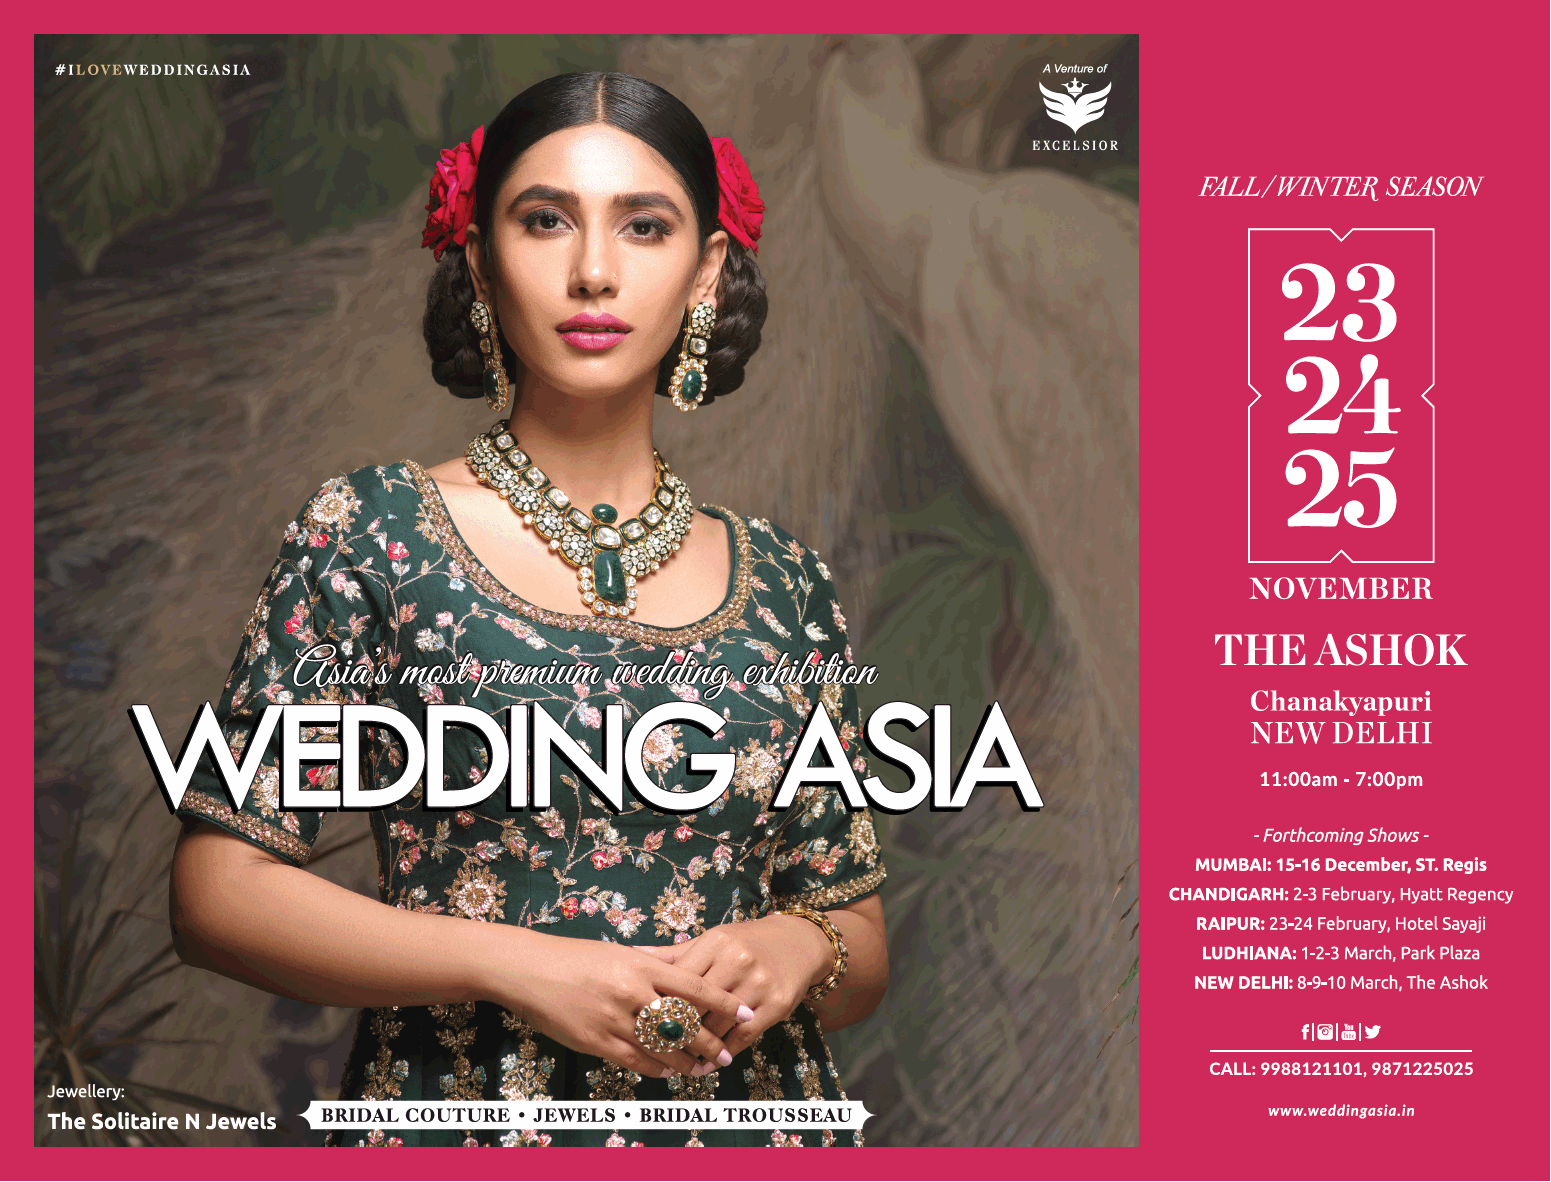 wedding-asia-asias-most-premium-wedding-exhibition-ad-delhi-times-24-11-2018.png